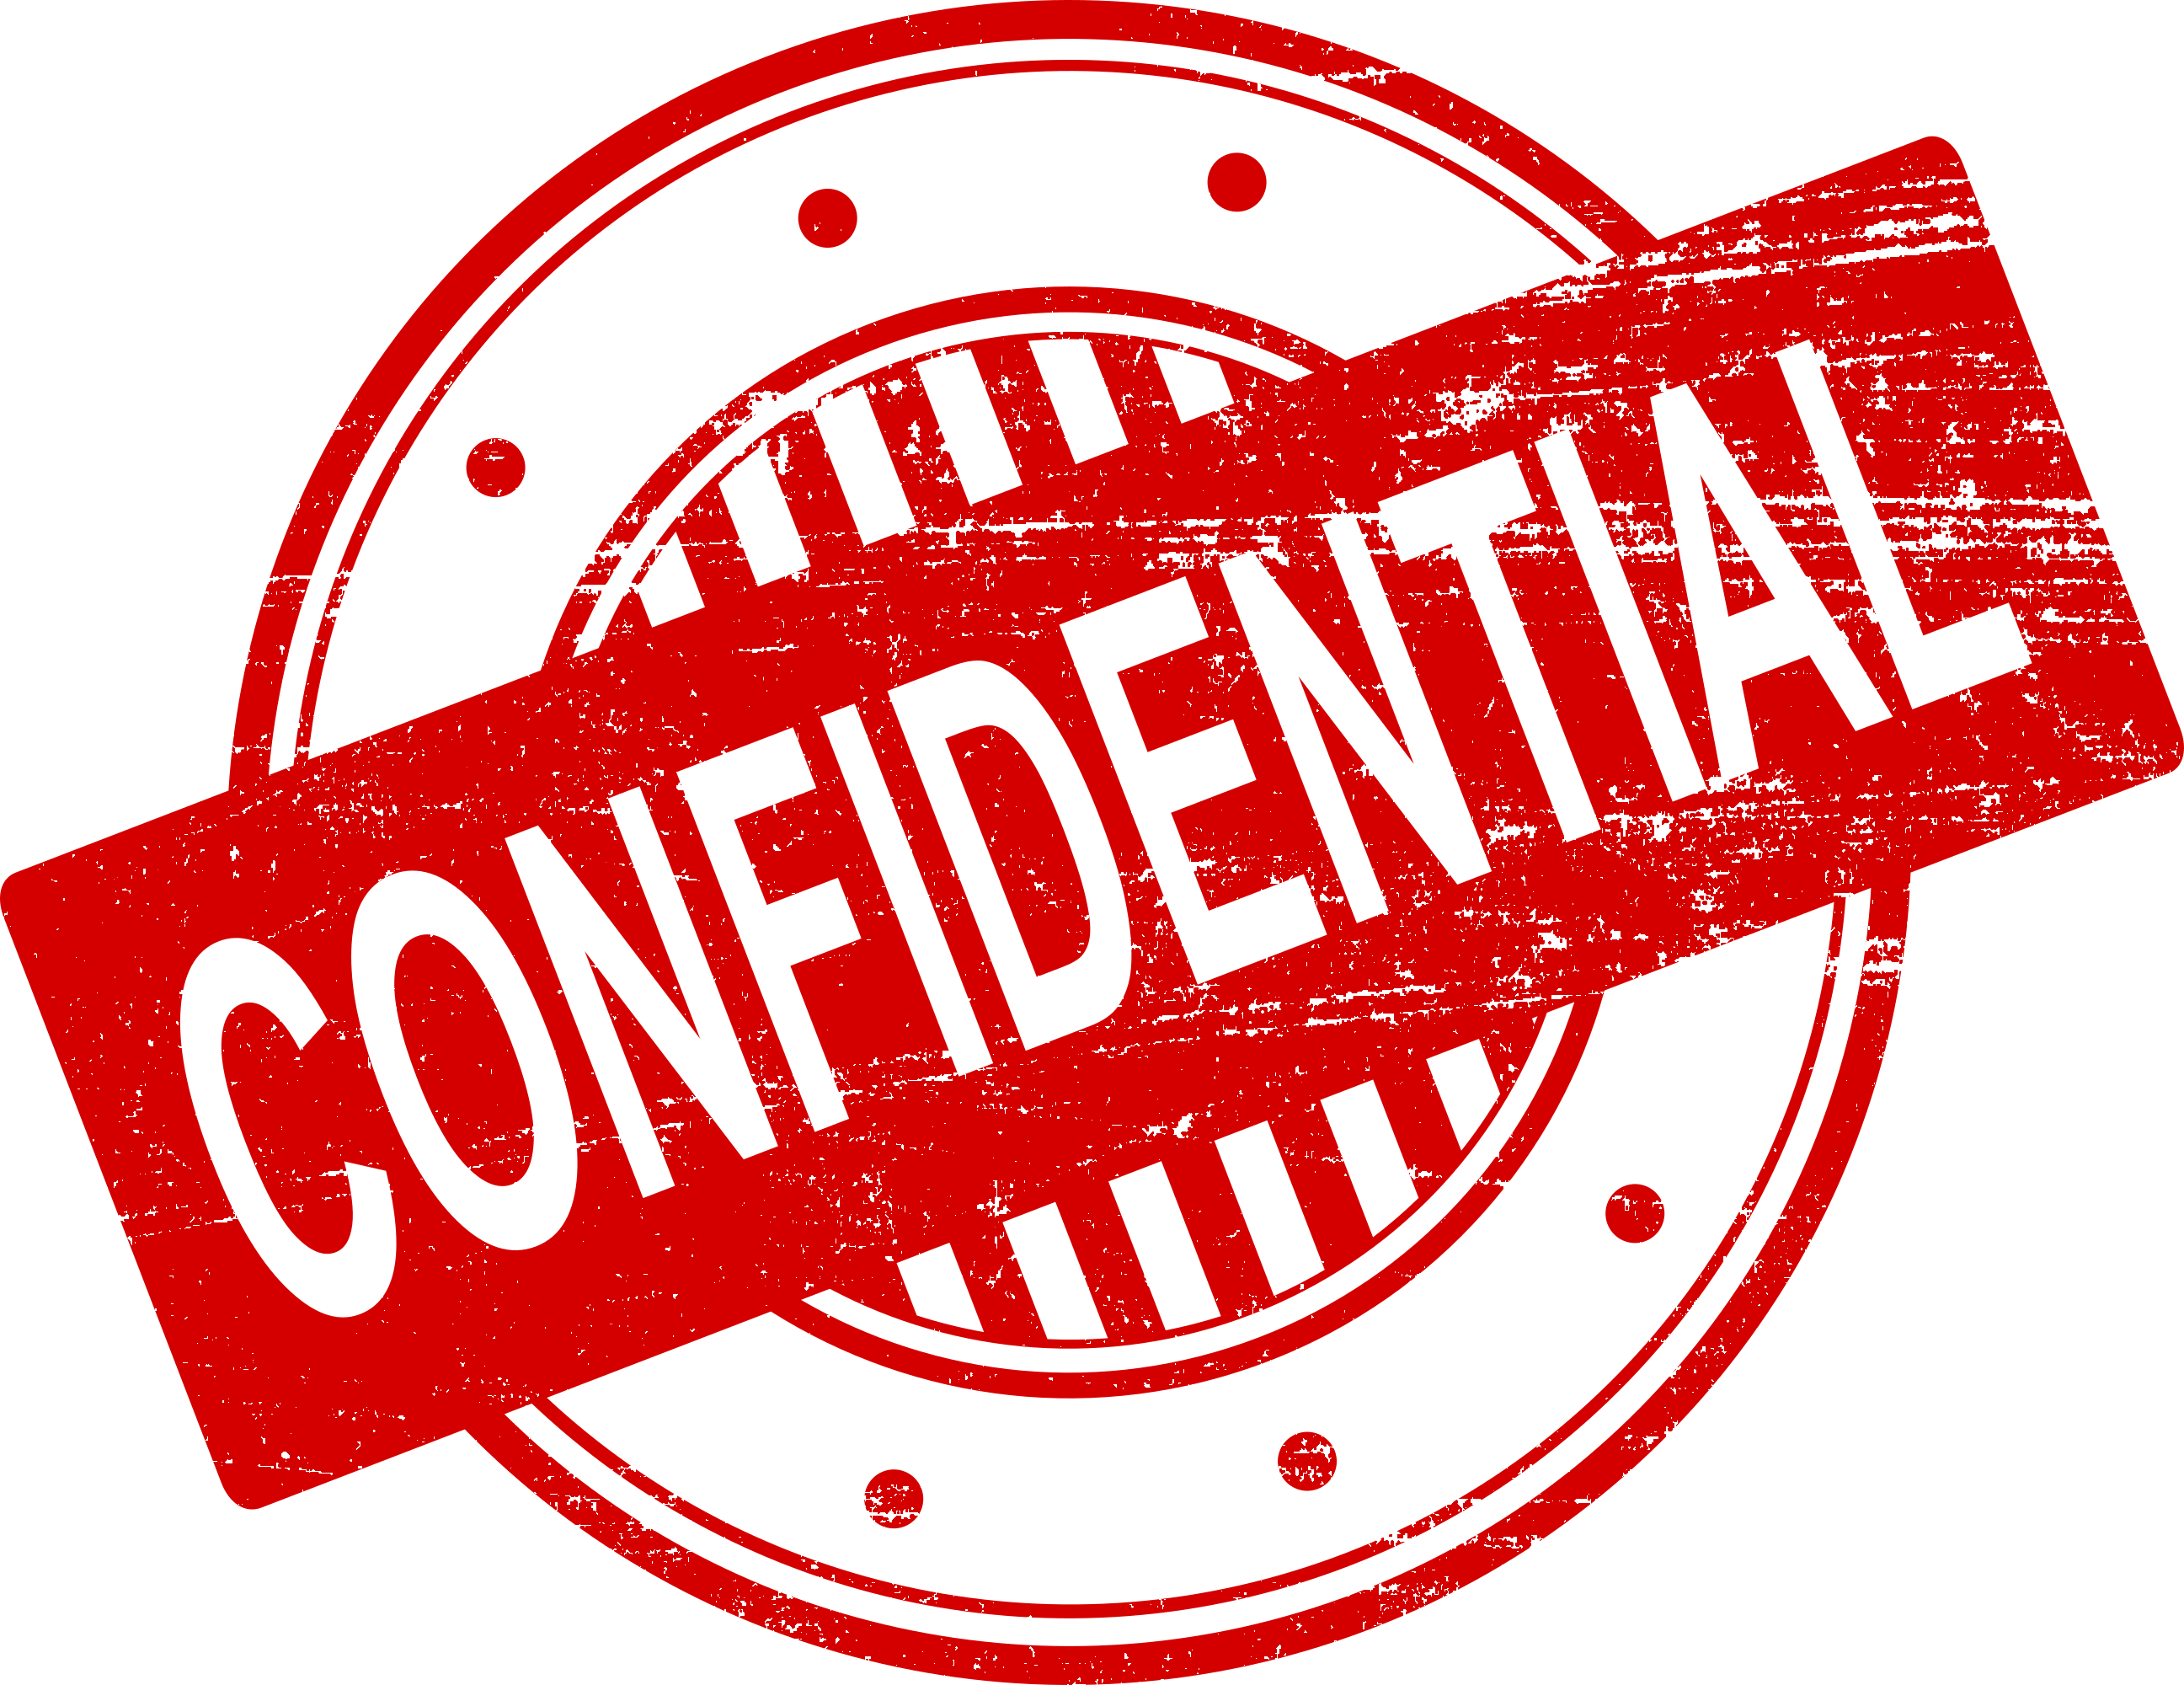 Confidential Logo - confidential logo png - AbeonCliparts | Cliparts & Vectors